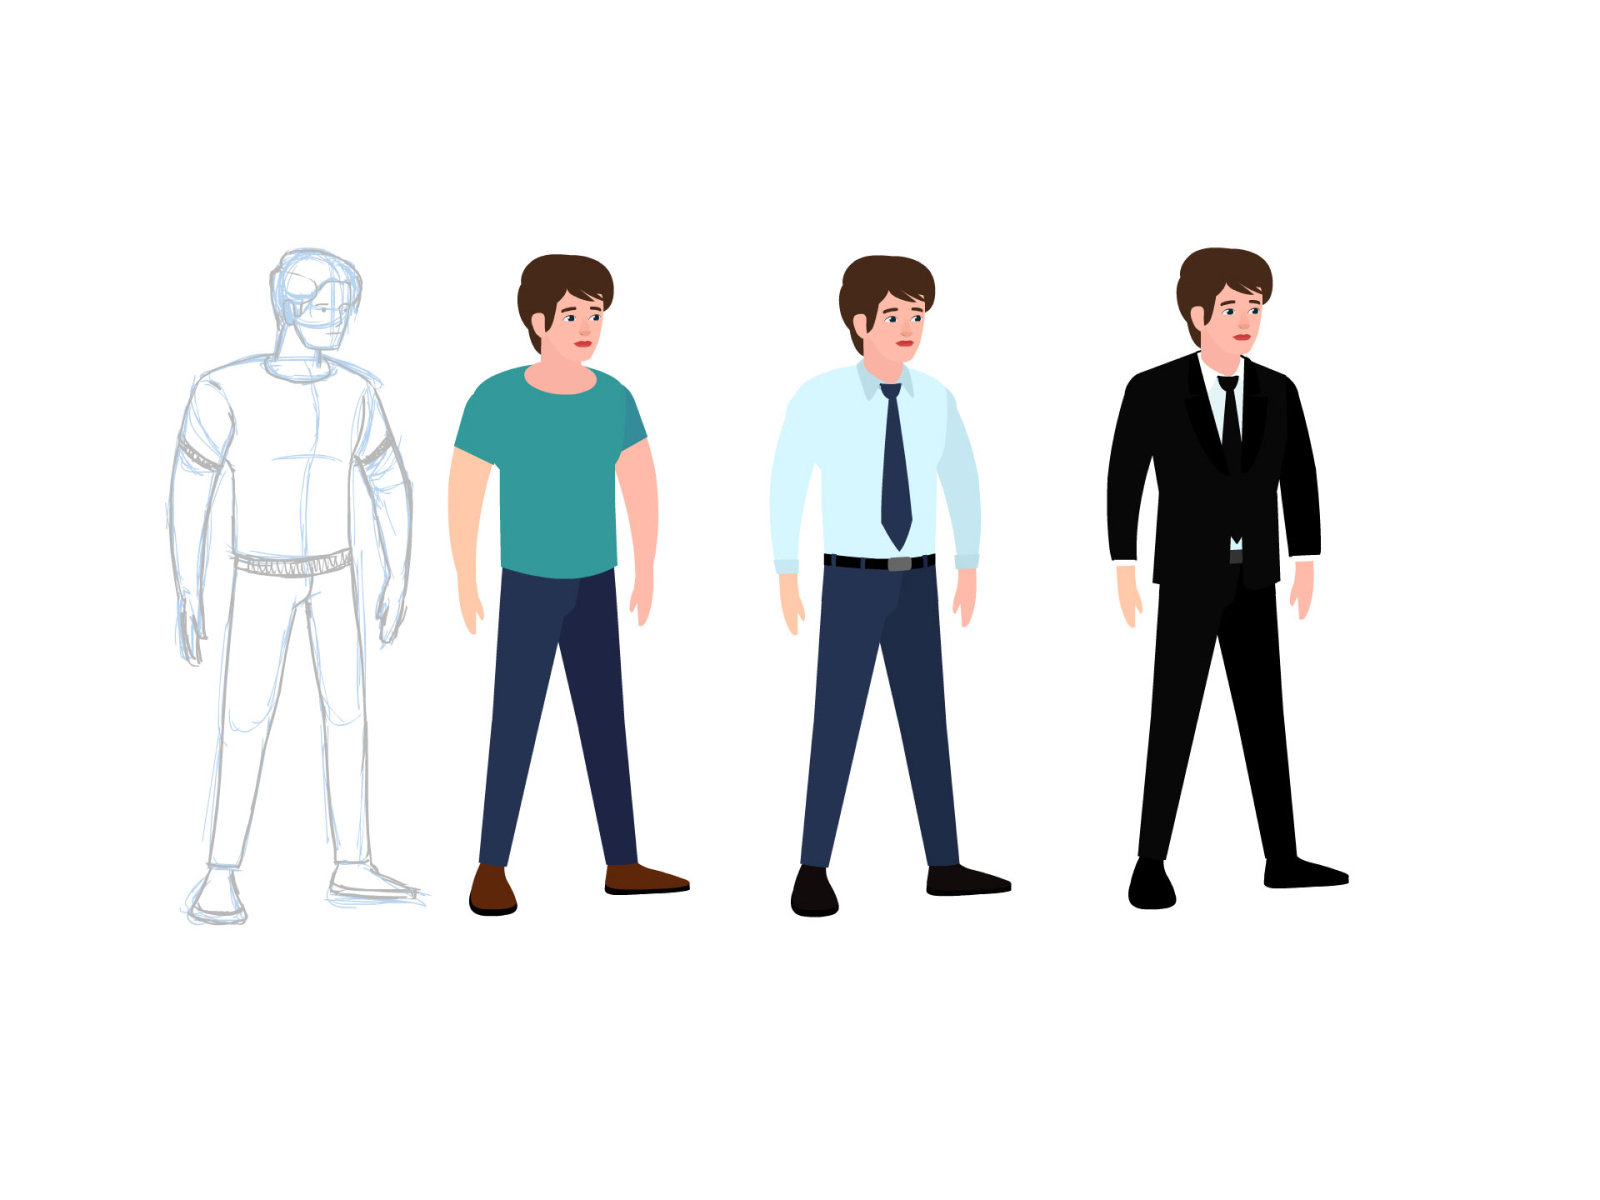 2D animation Hero character design concepts by Joshuaprakash on Dribbble